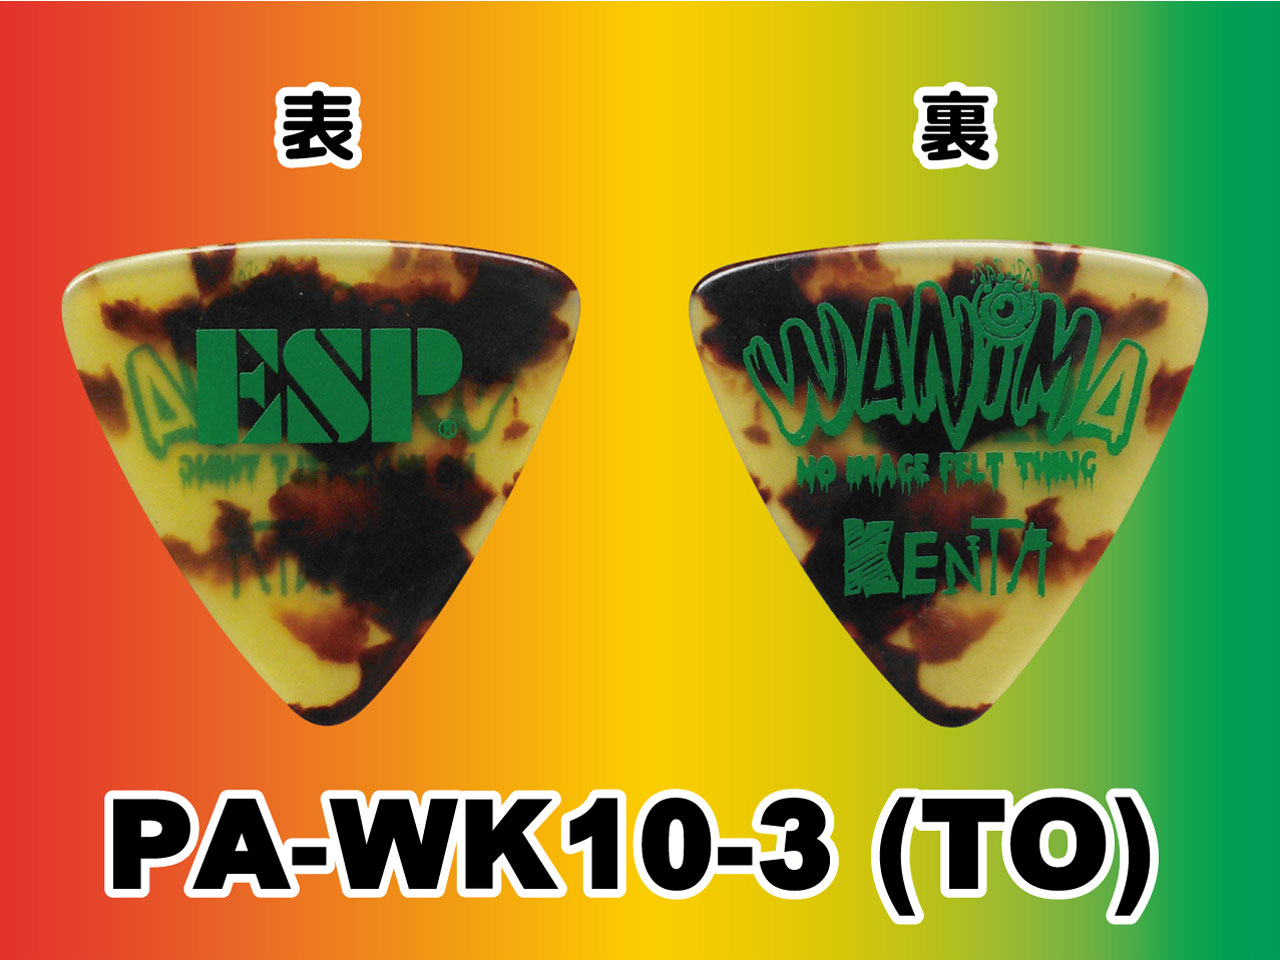 ESP(イーエスピー) Artist Pick Series PA-WK10-3 (WANIMA/KENTA Model)